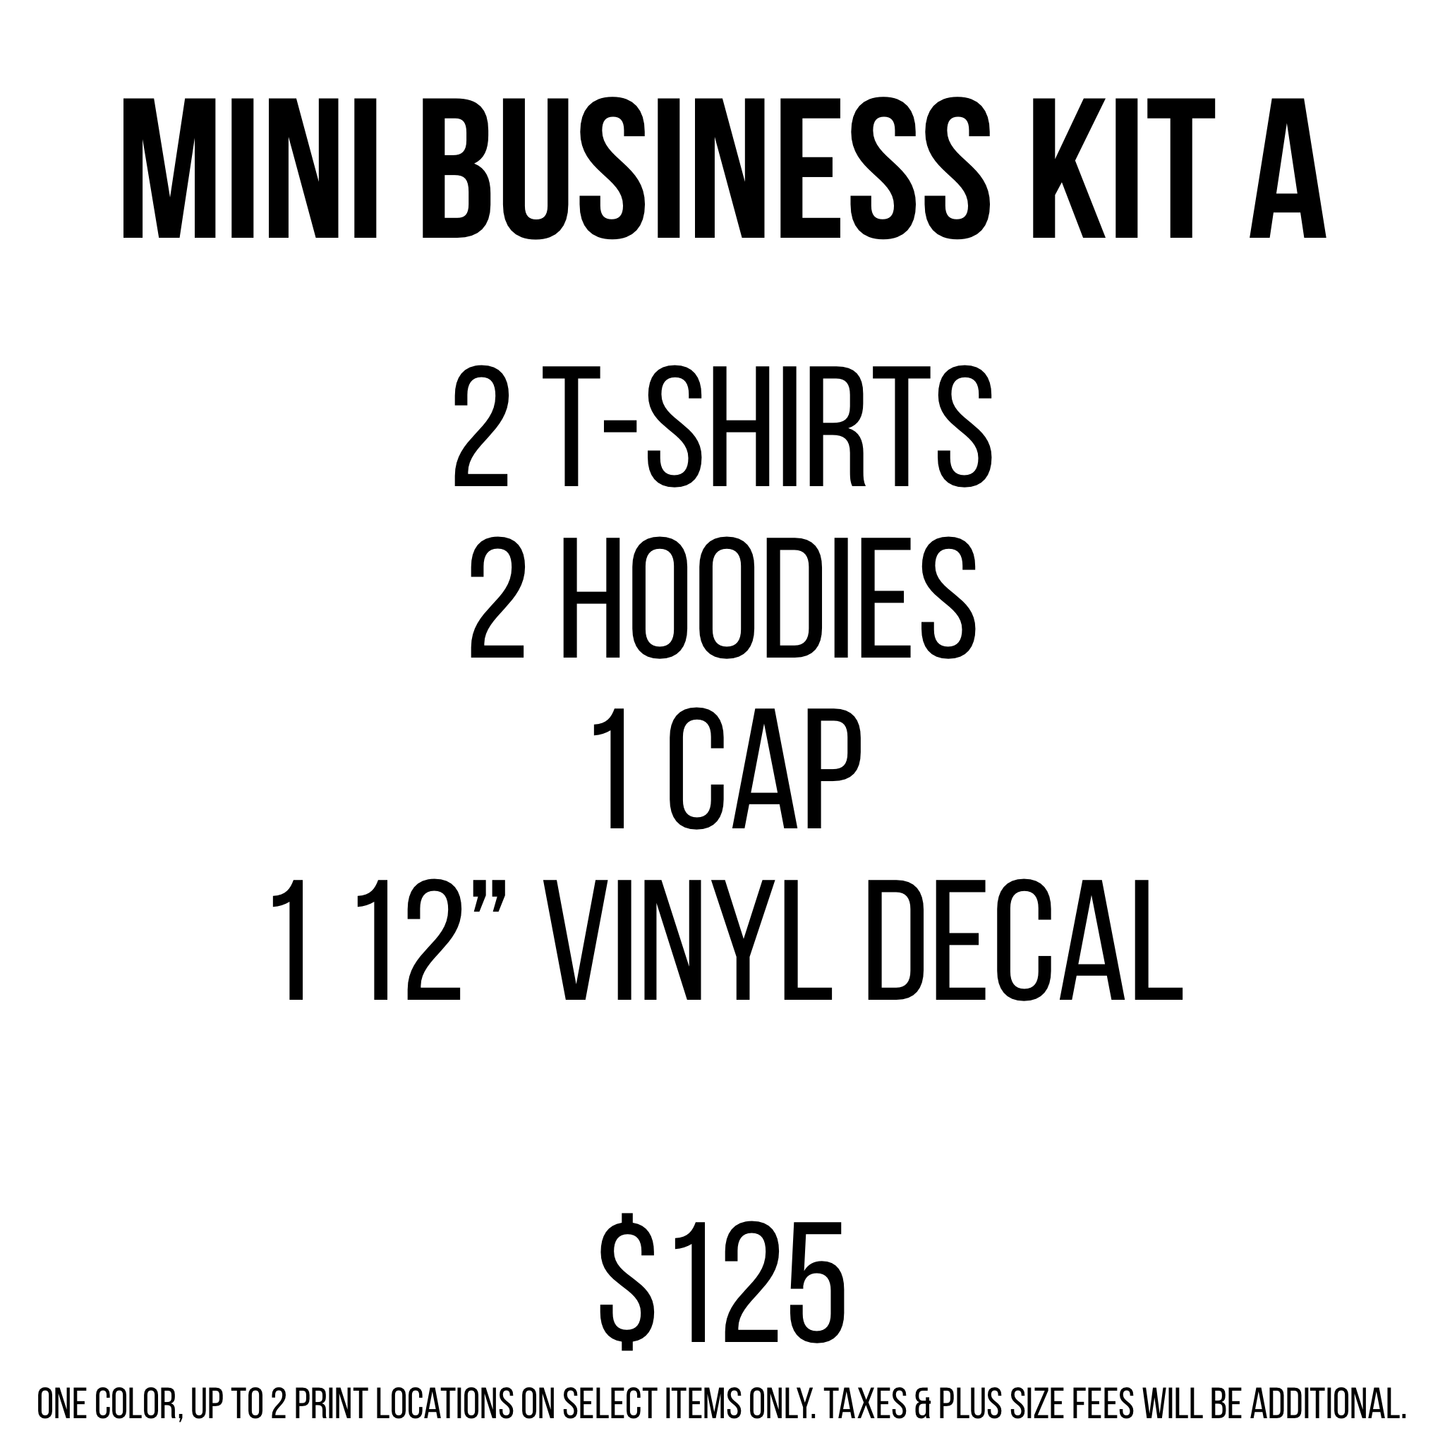 Mini Business Kit A